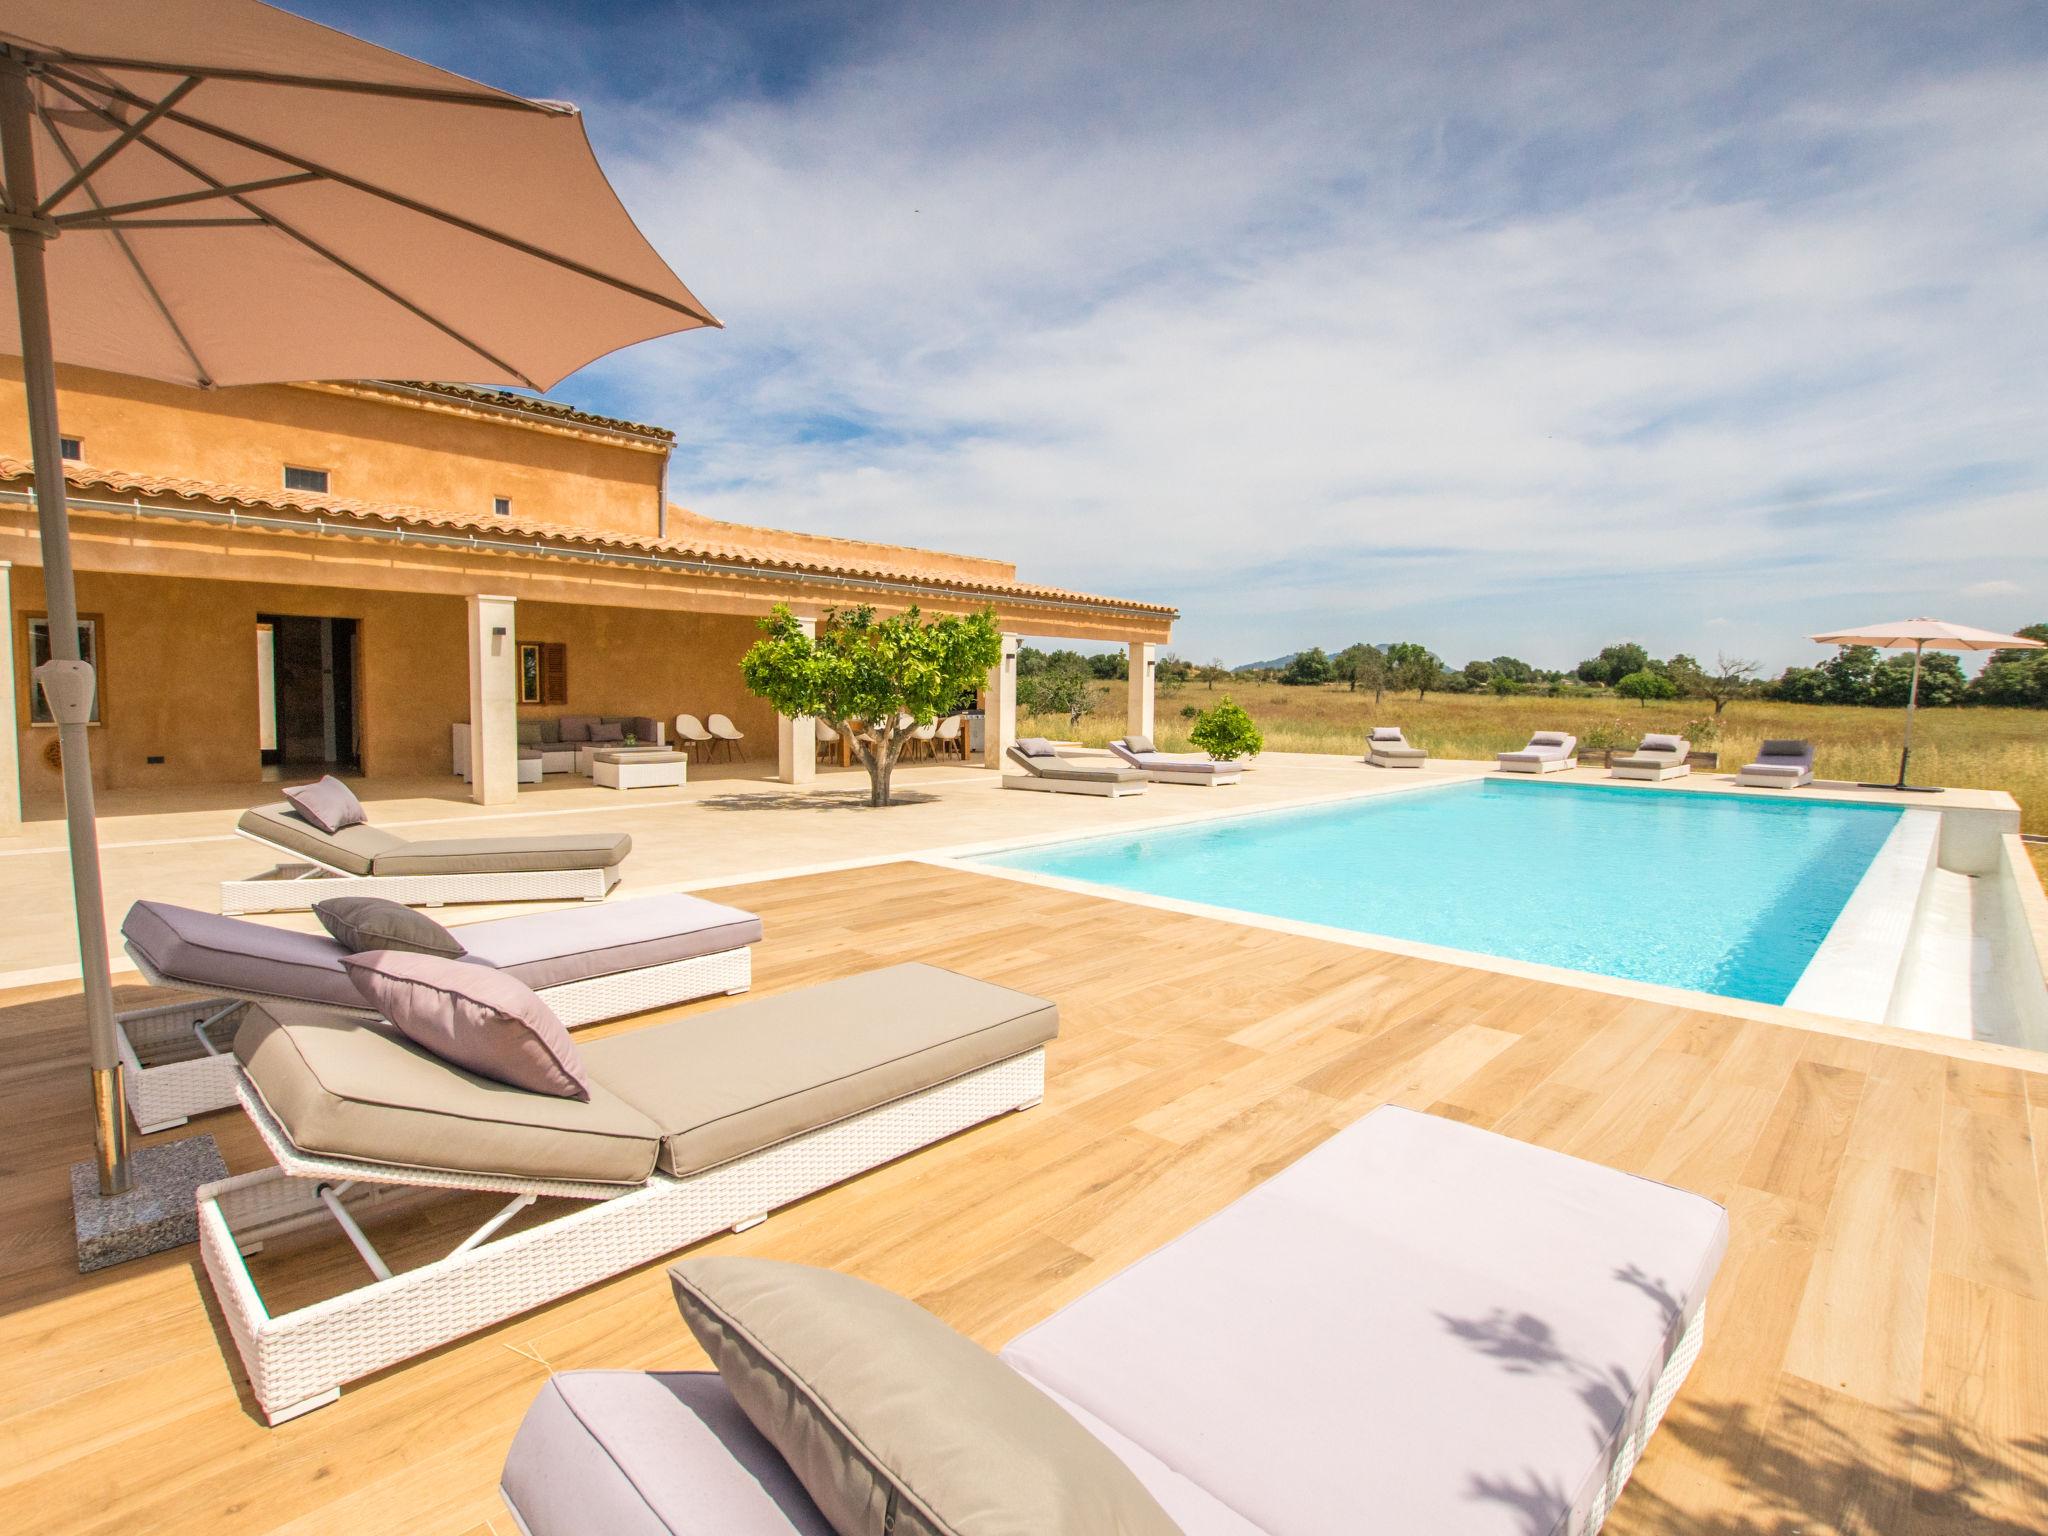 Foto 40 - Casa con 6 camere da letto a Sencelles con piscina privata e giardino